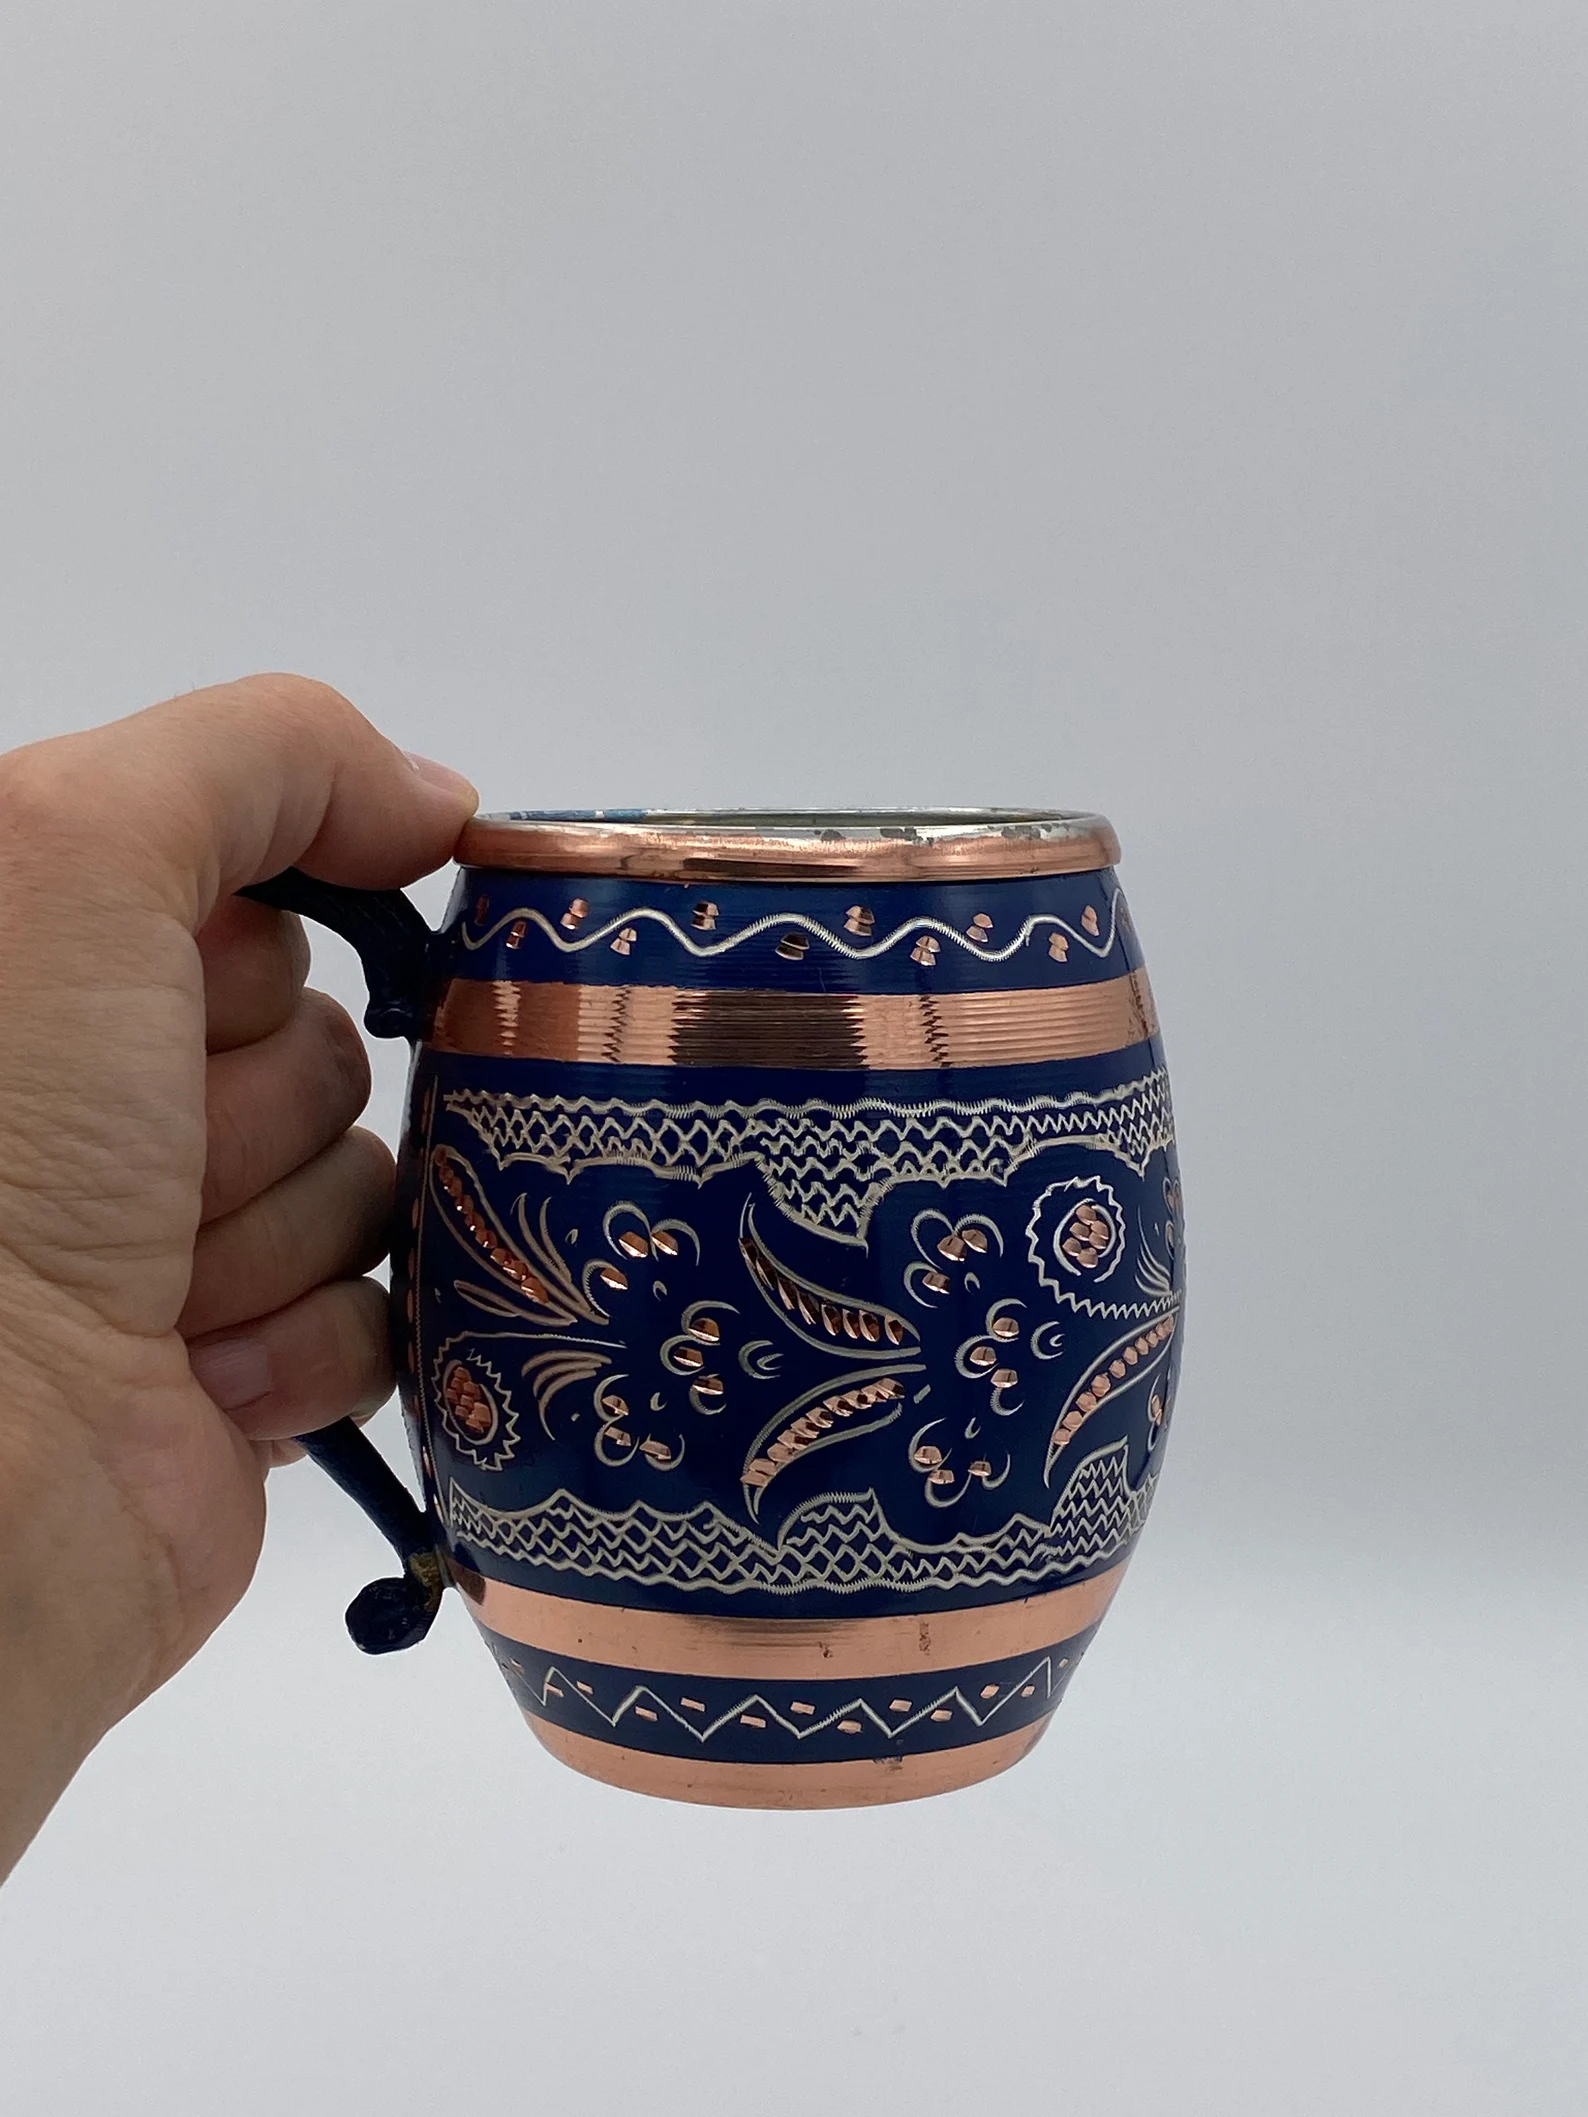 Etched moscow mule mug, artisan moscow mule mugs